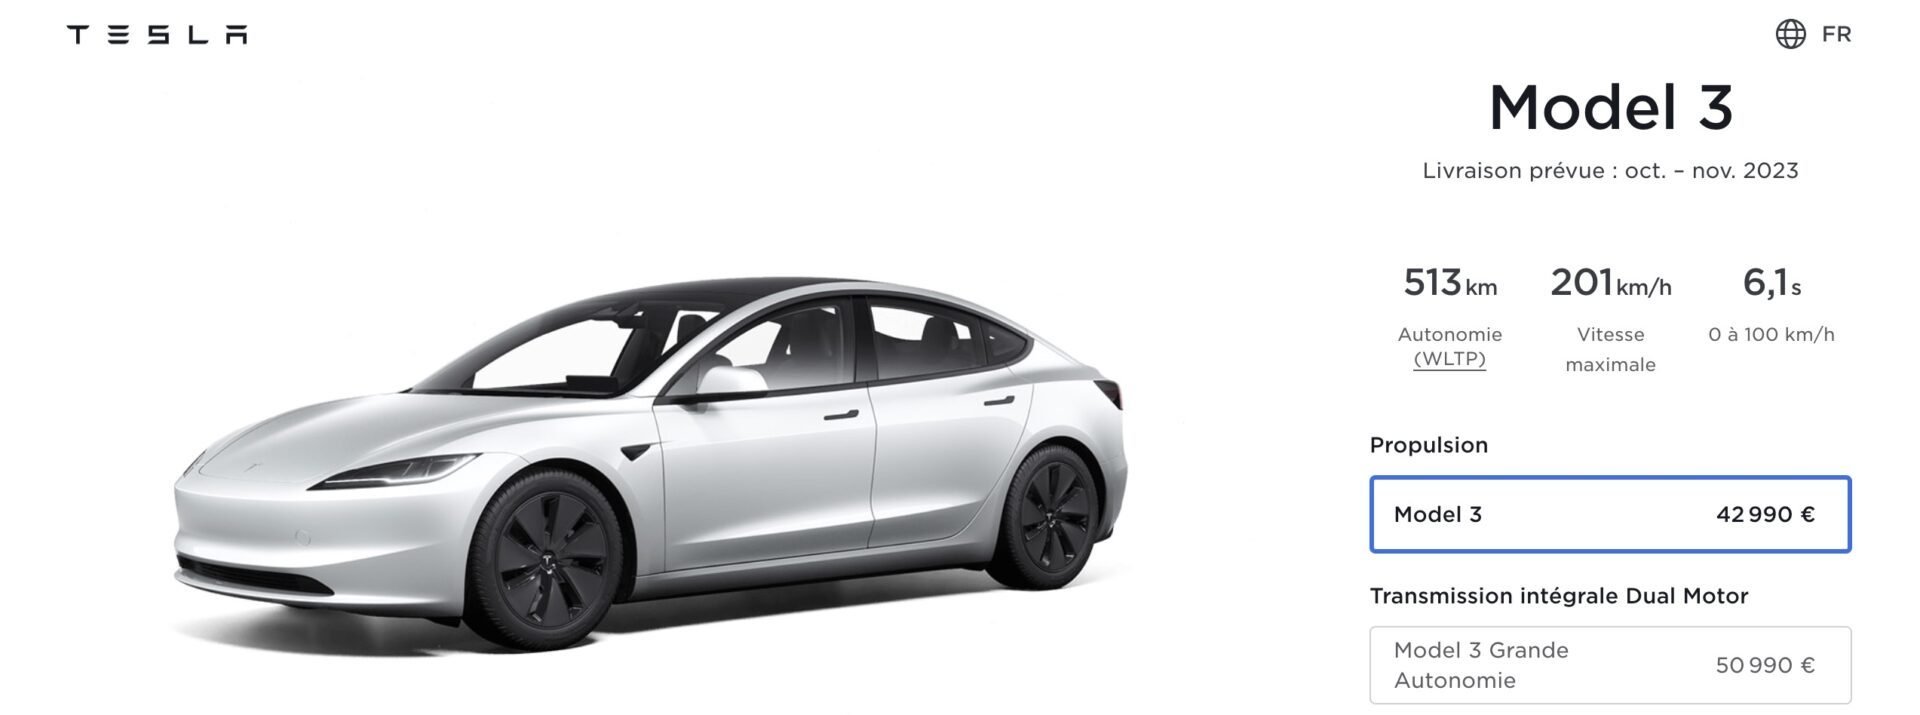 Tesla Model 3 Prix Septembre 2023